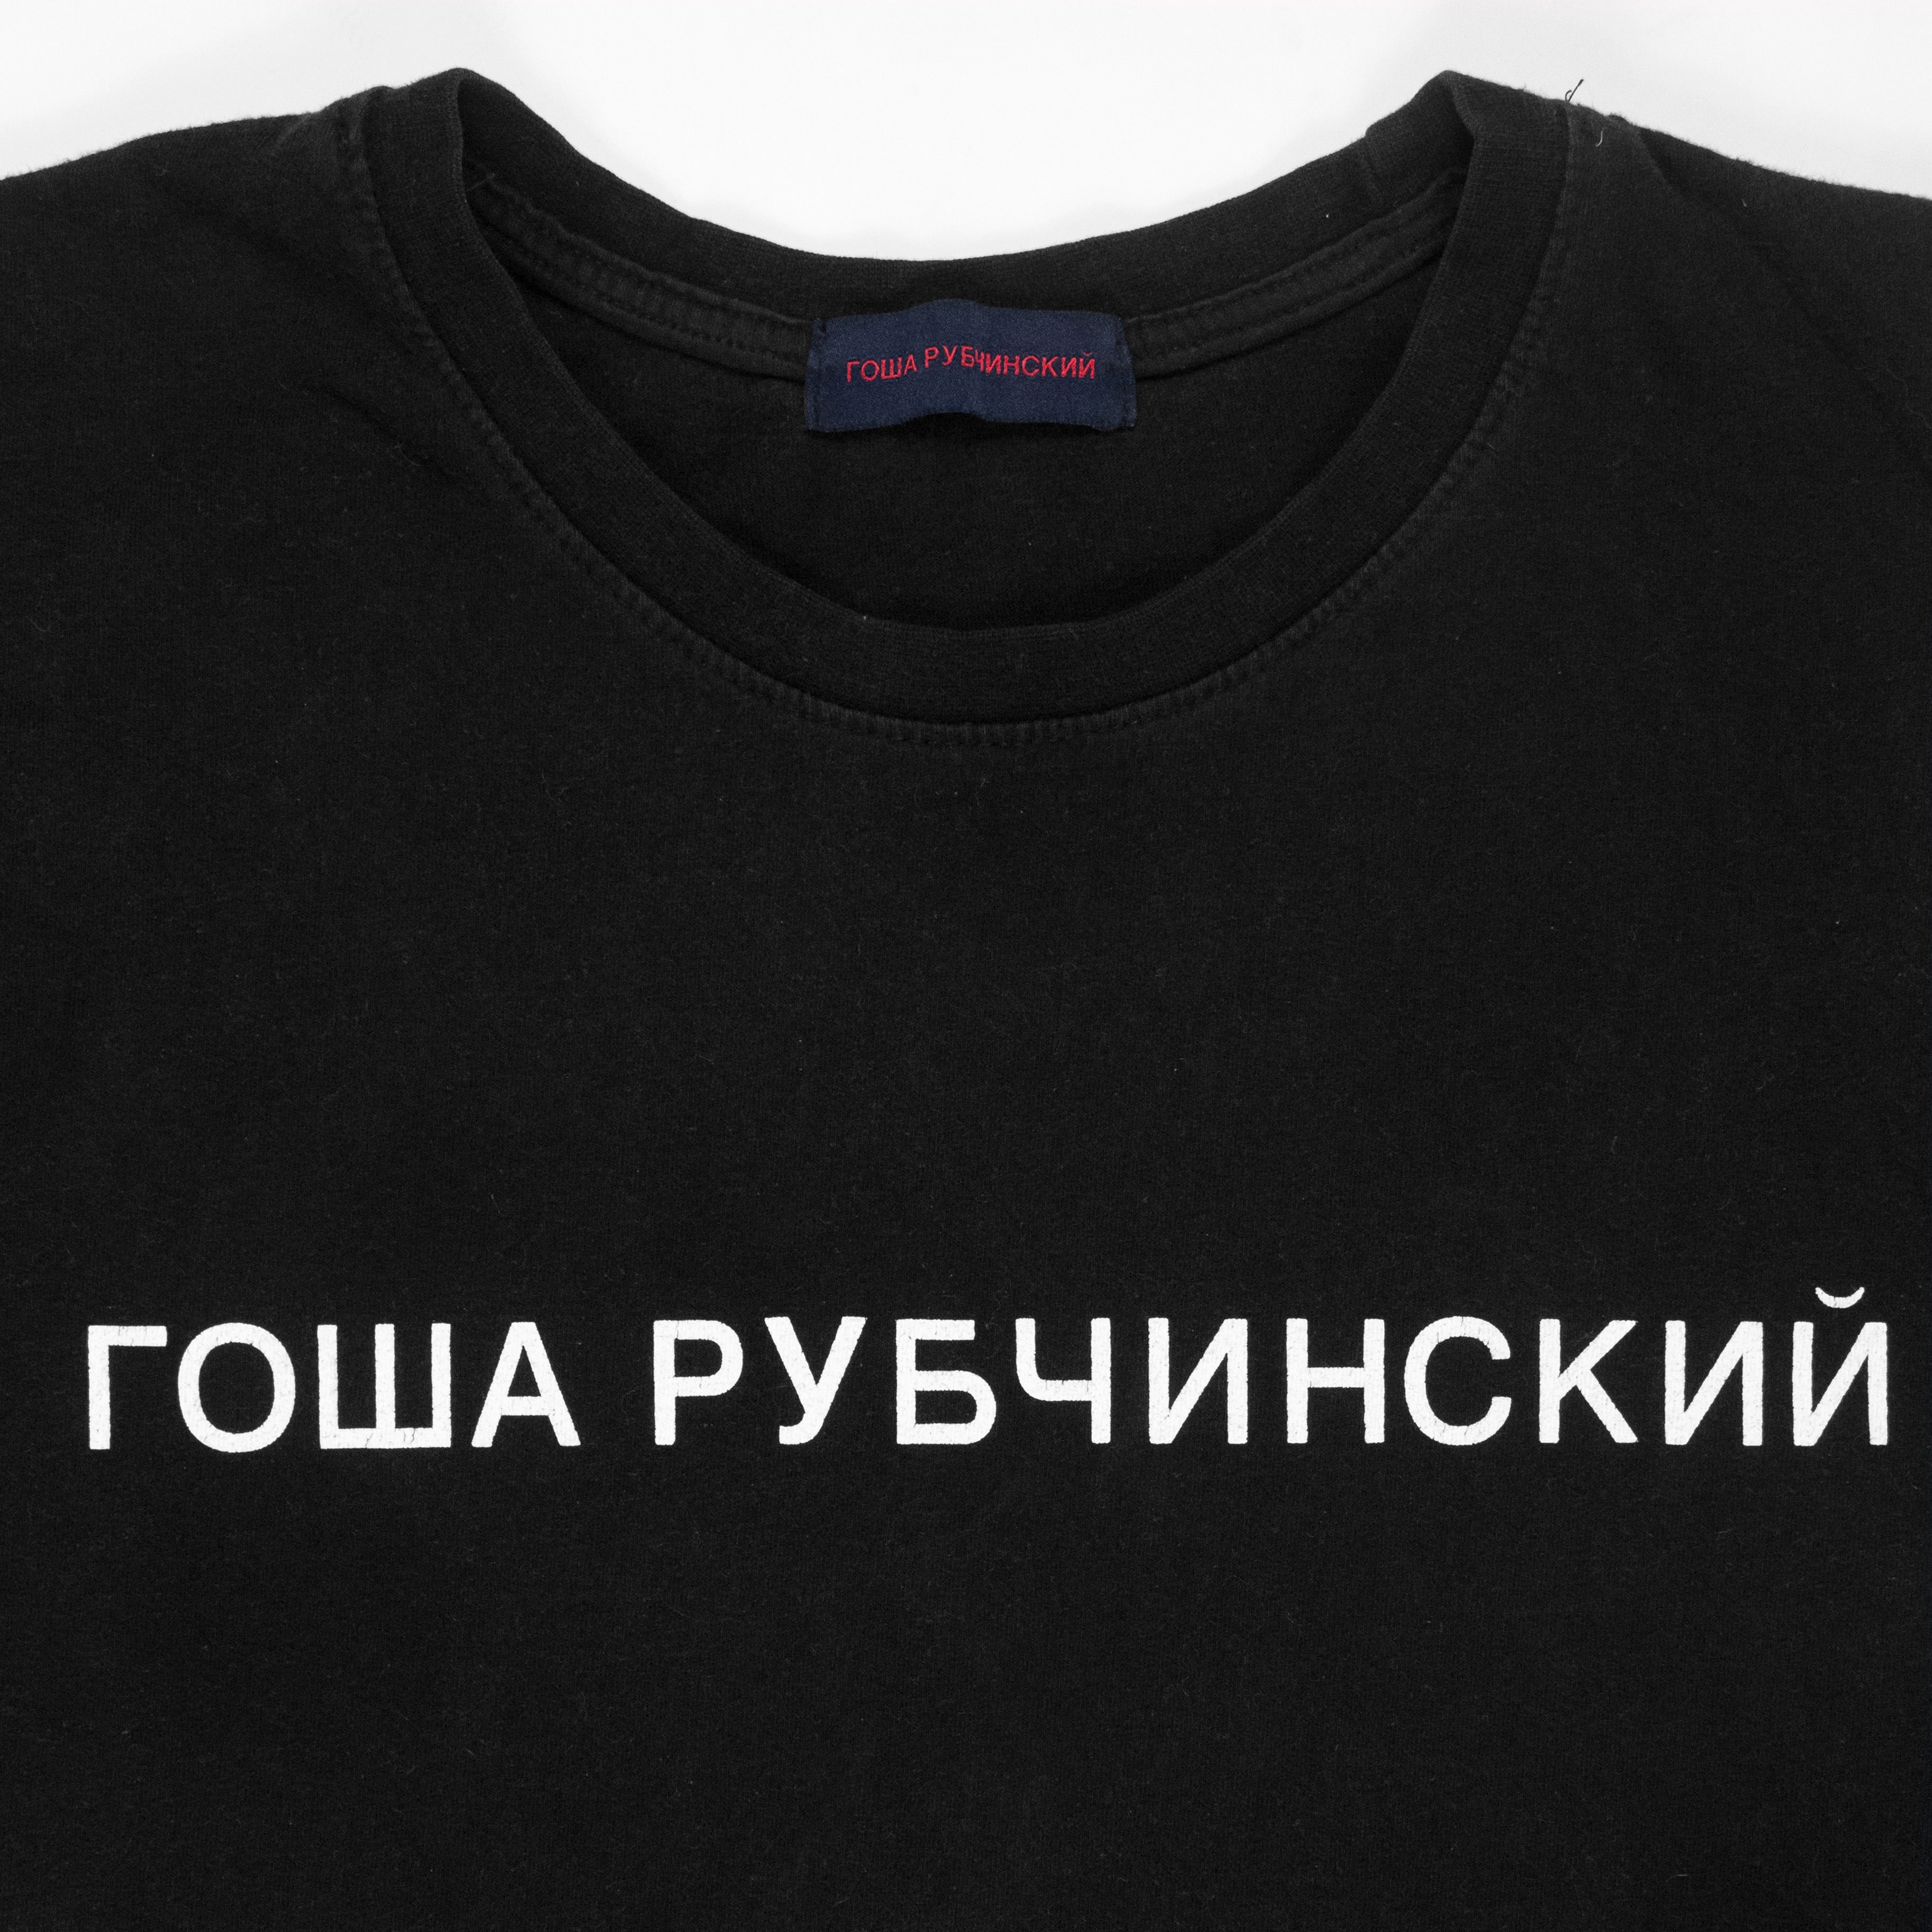 Gosha Rubchinskiy Tee Shirt - SS16